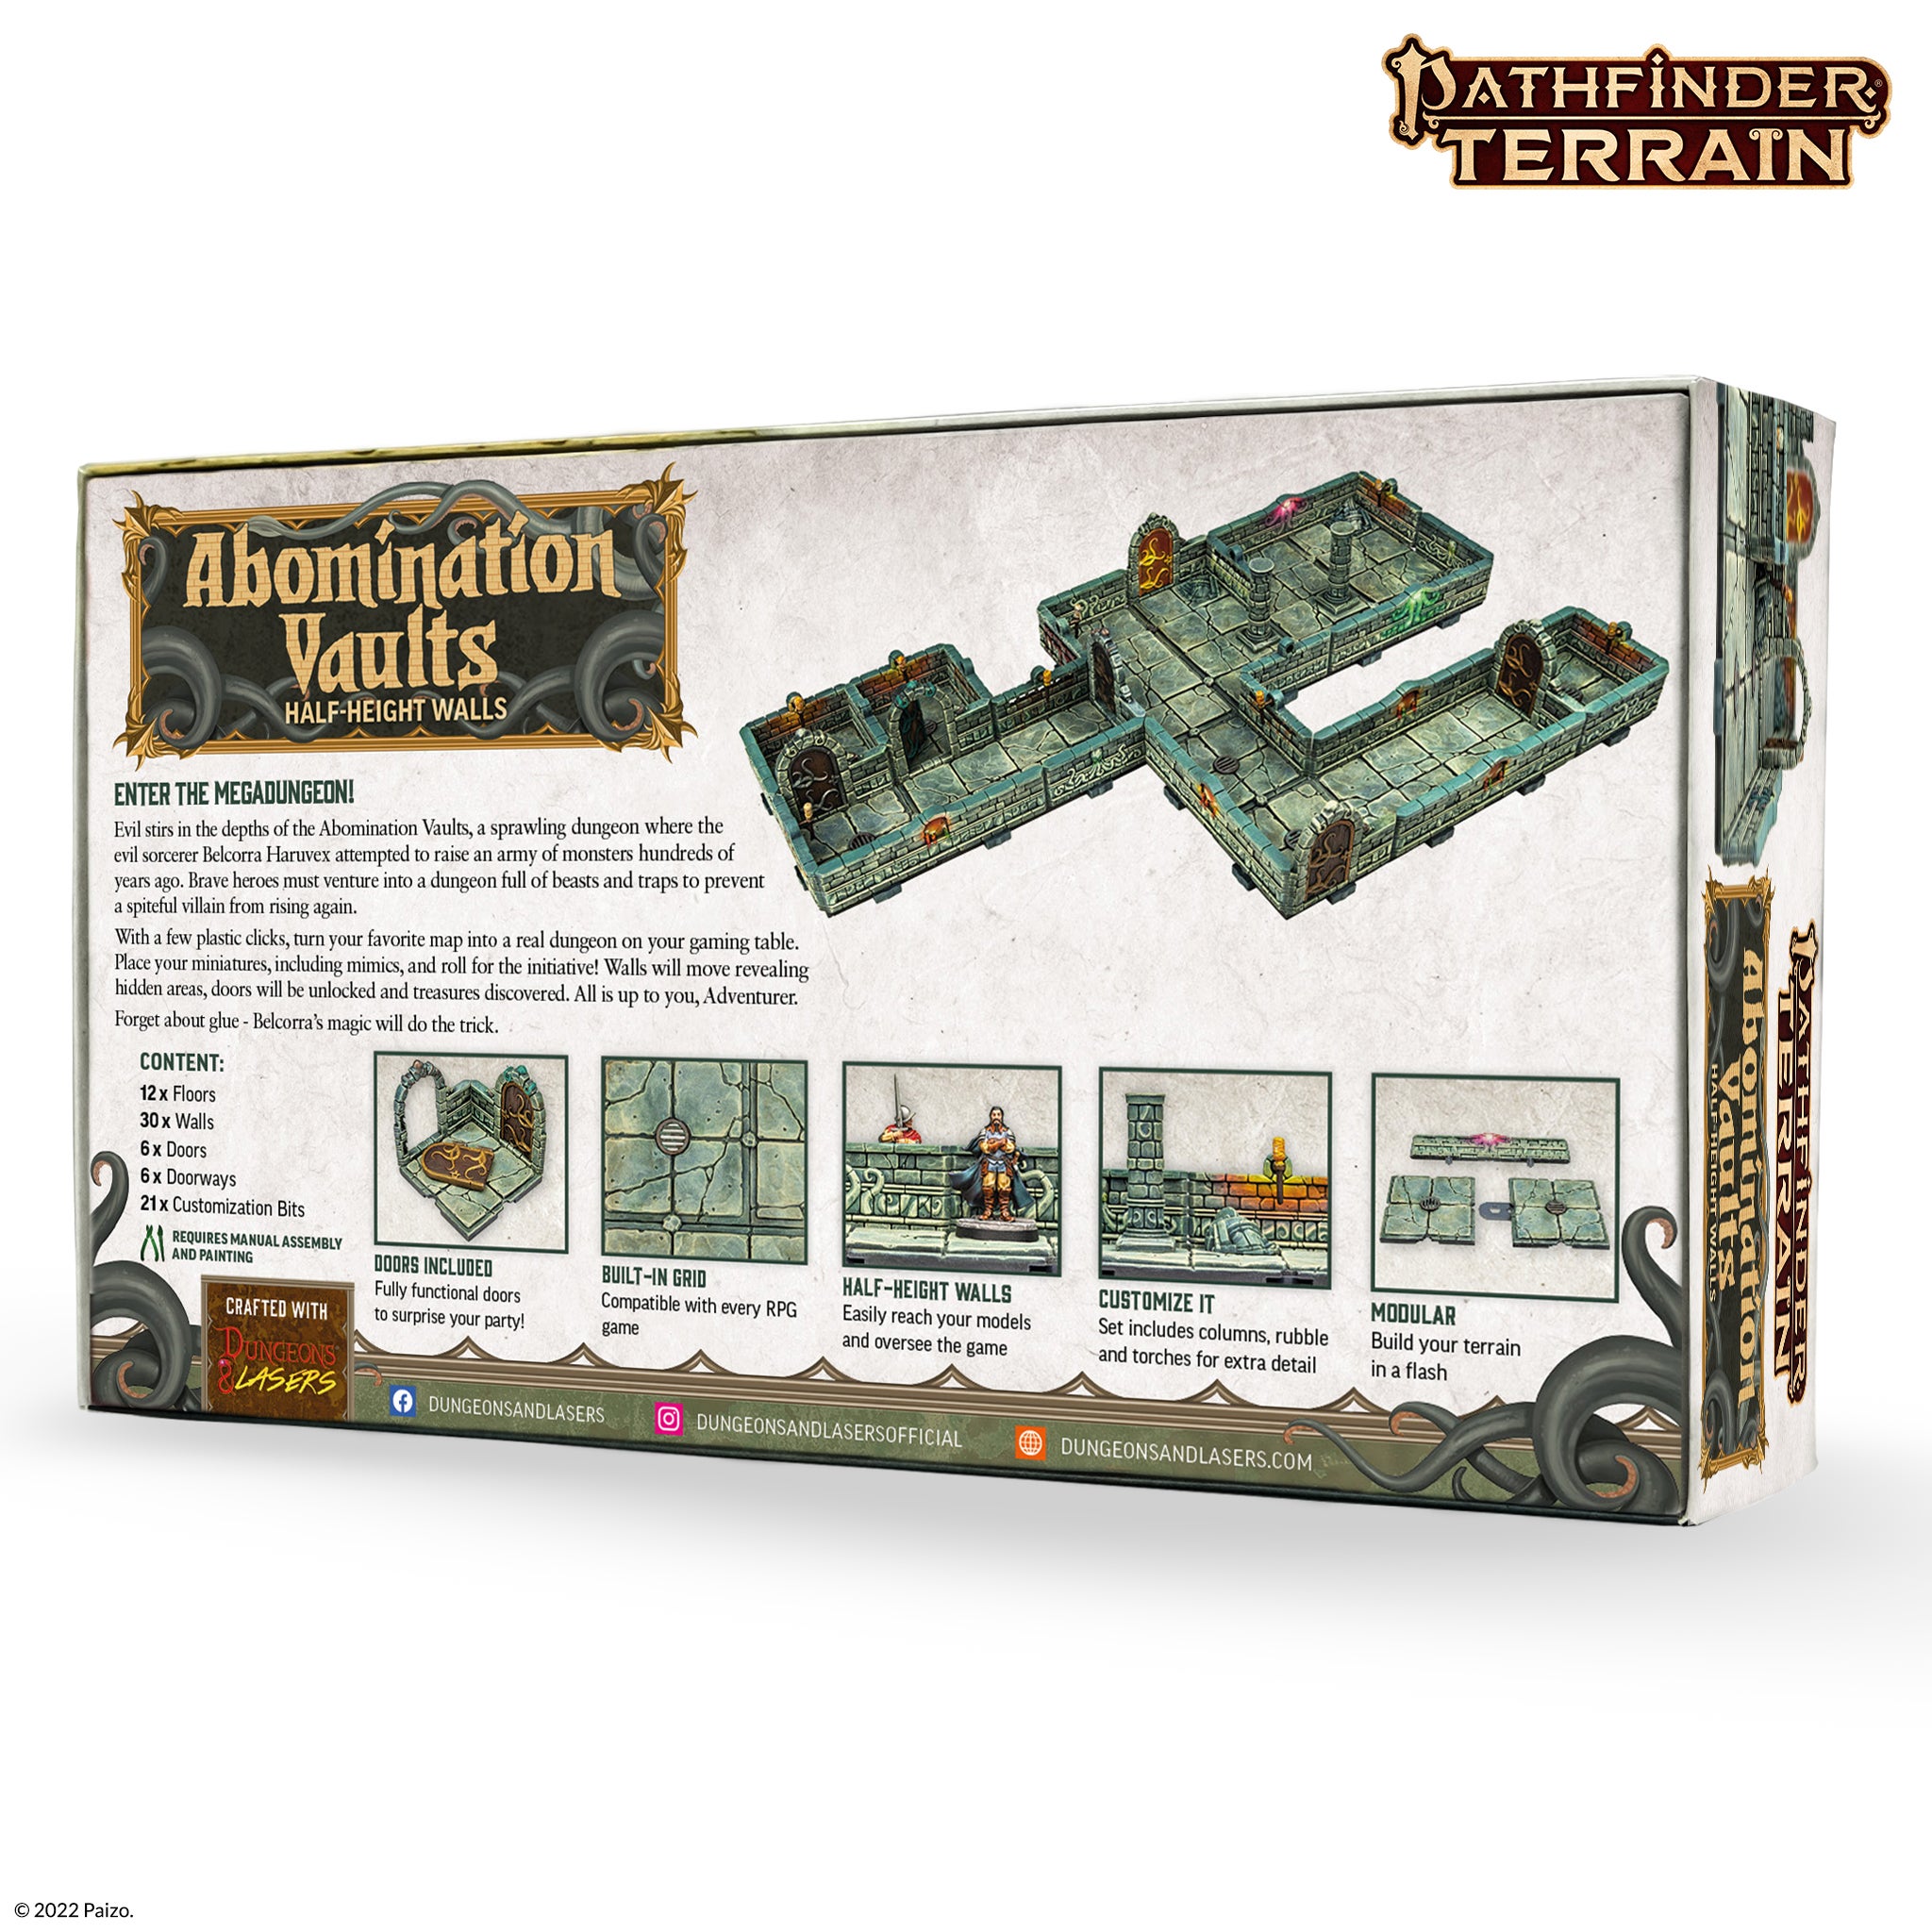 Pathfinder Terrain: Abomination Vaults Half-Height Walls Box Back